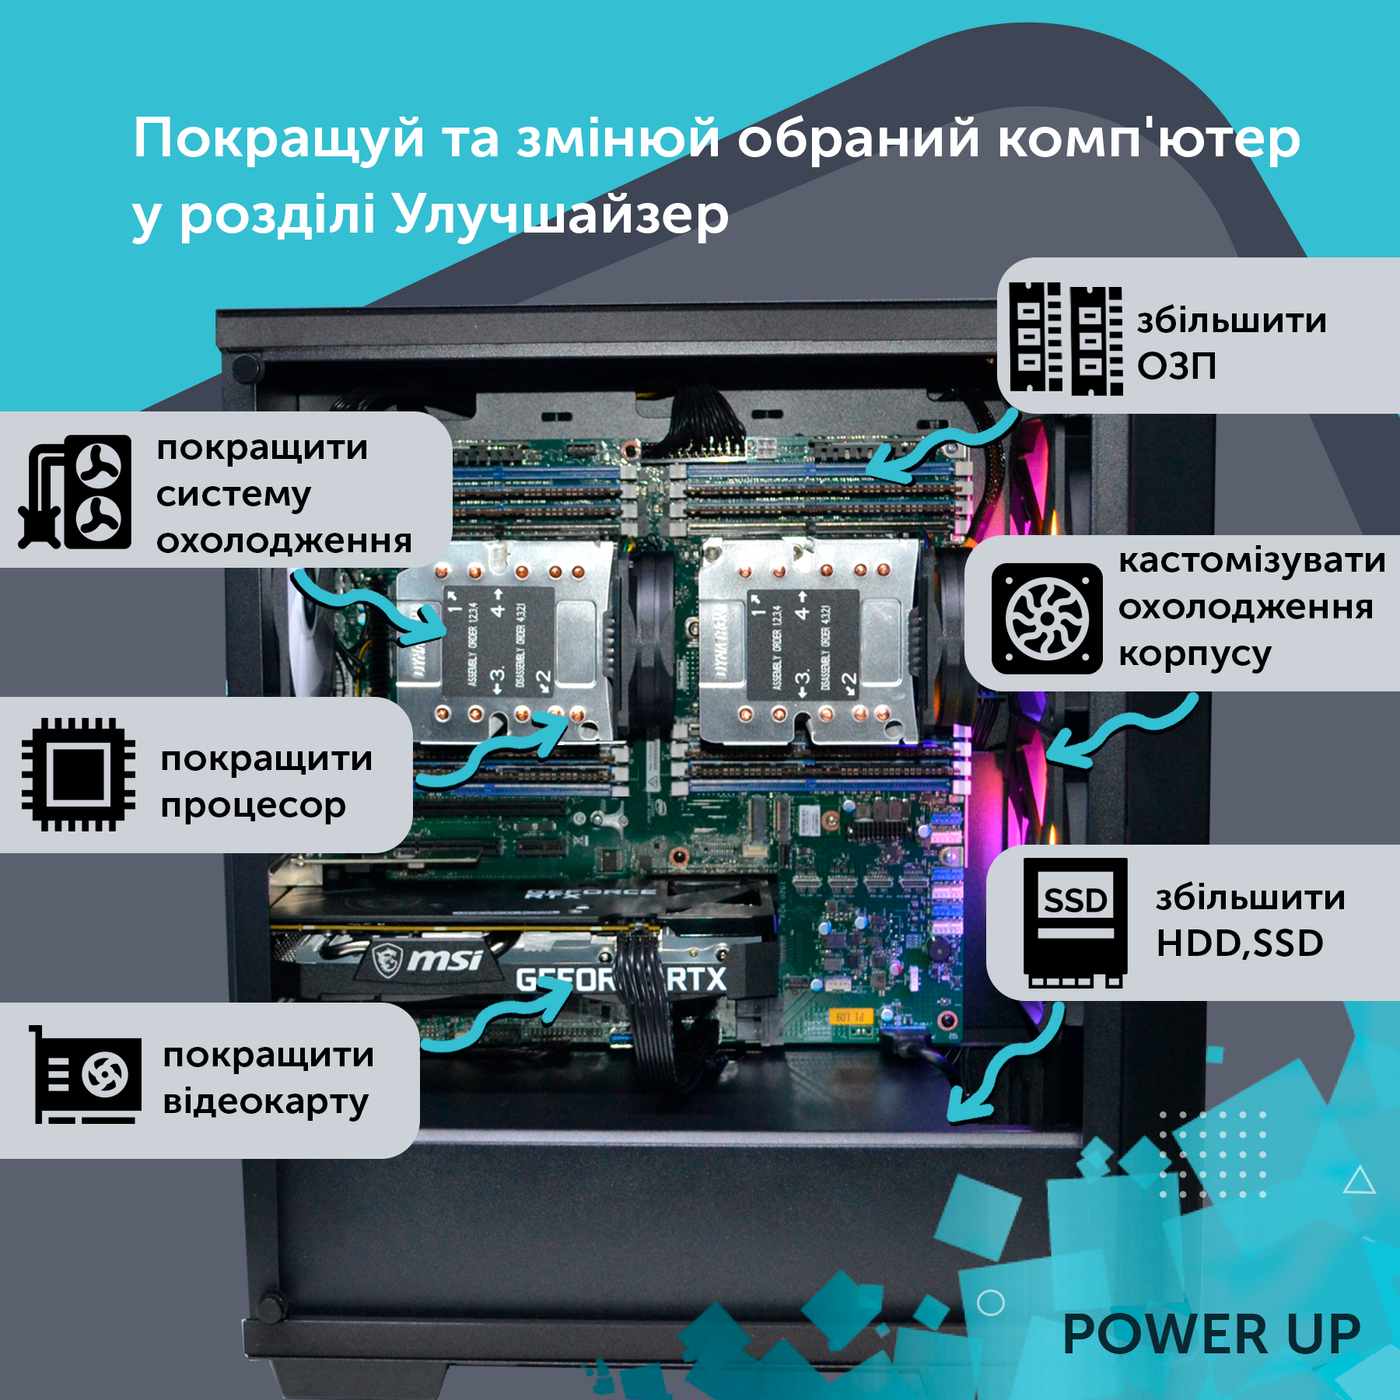 Рабочая станция PowerUp Desktop #70 Ryzen 9 5900x/32 GB/HDD 2 TB/SSD 512GB/NVIDIA Quadro M2000 4GB